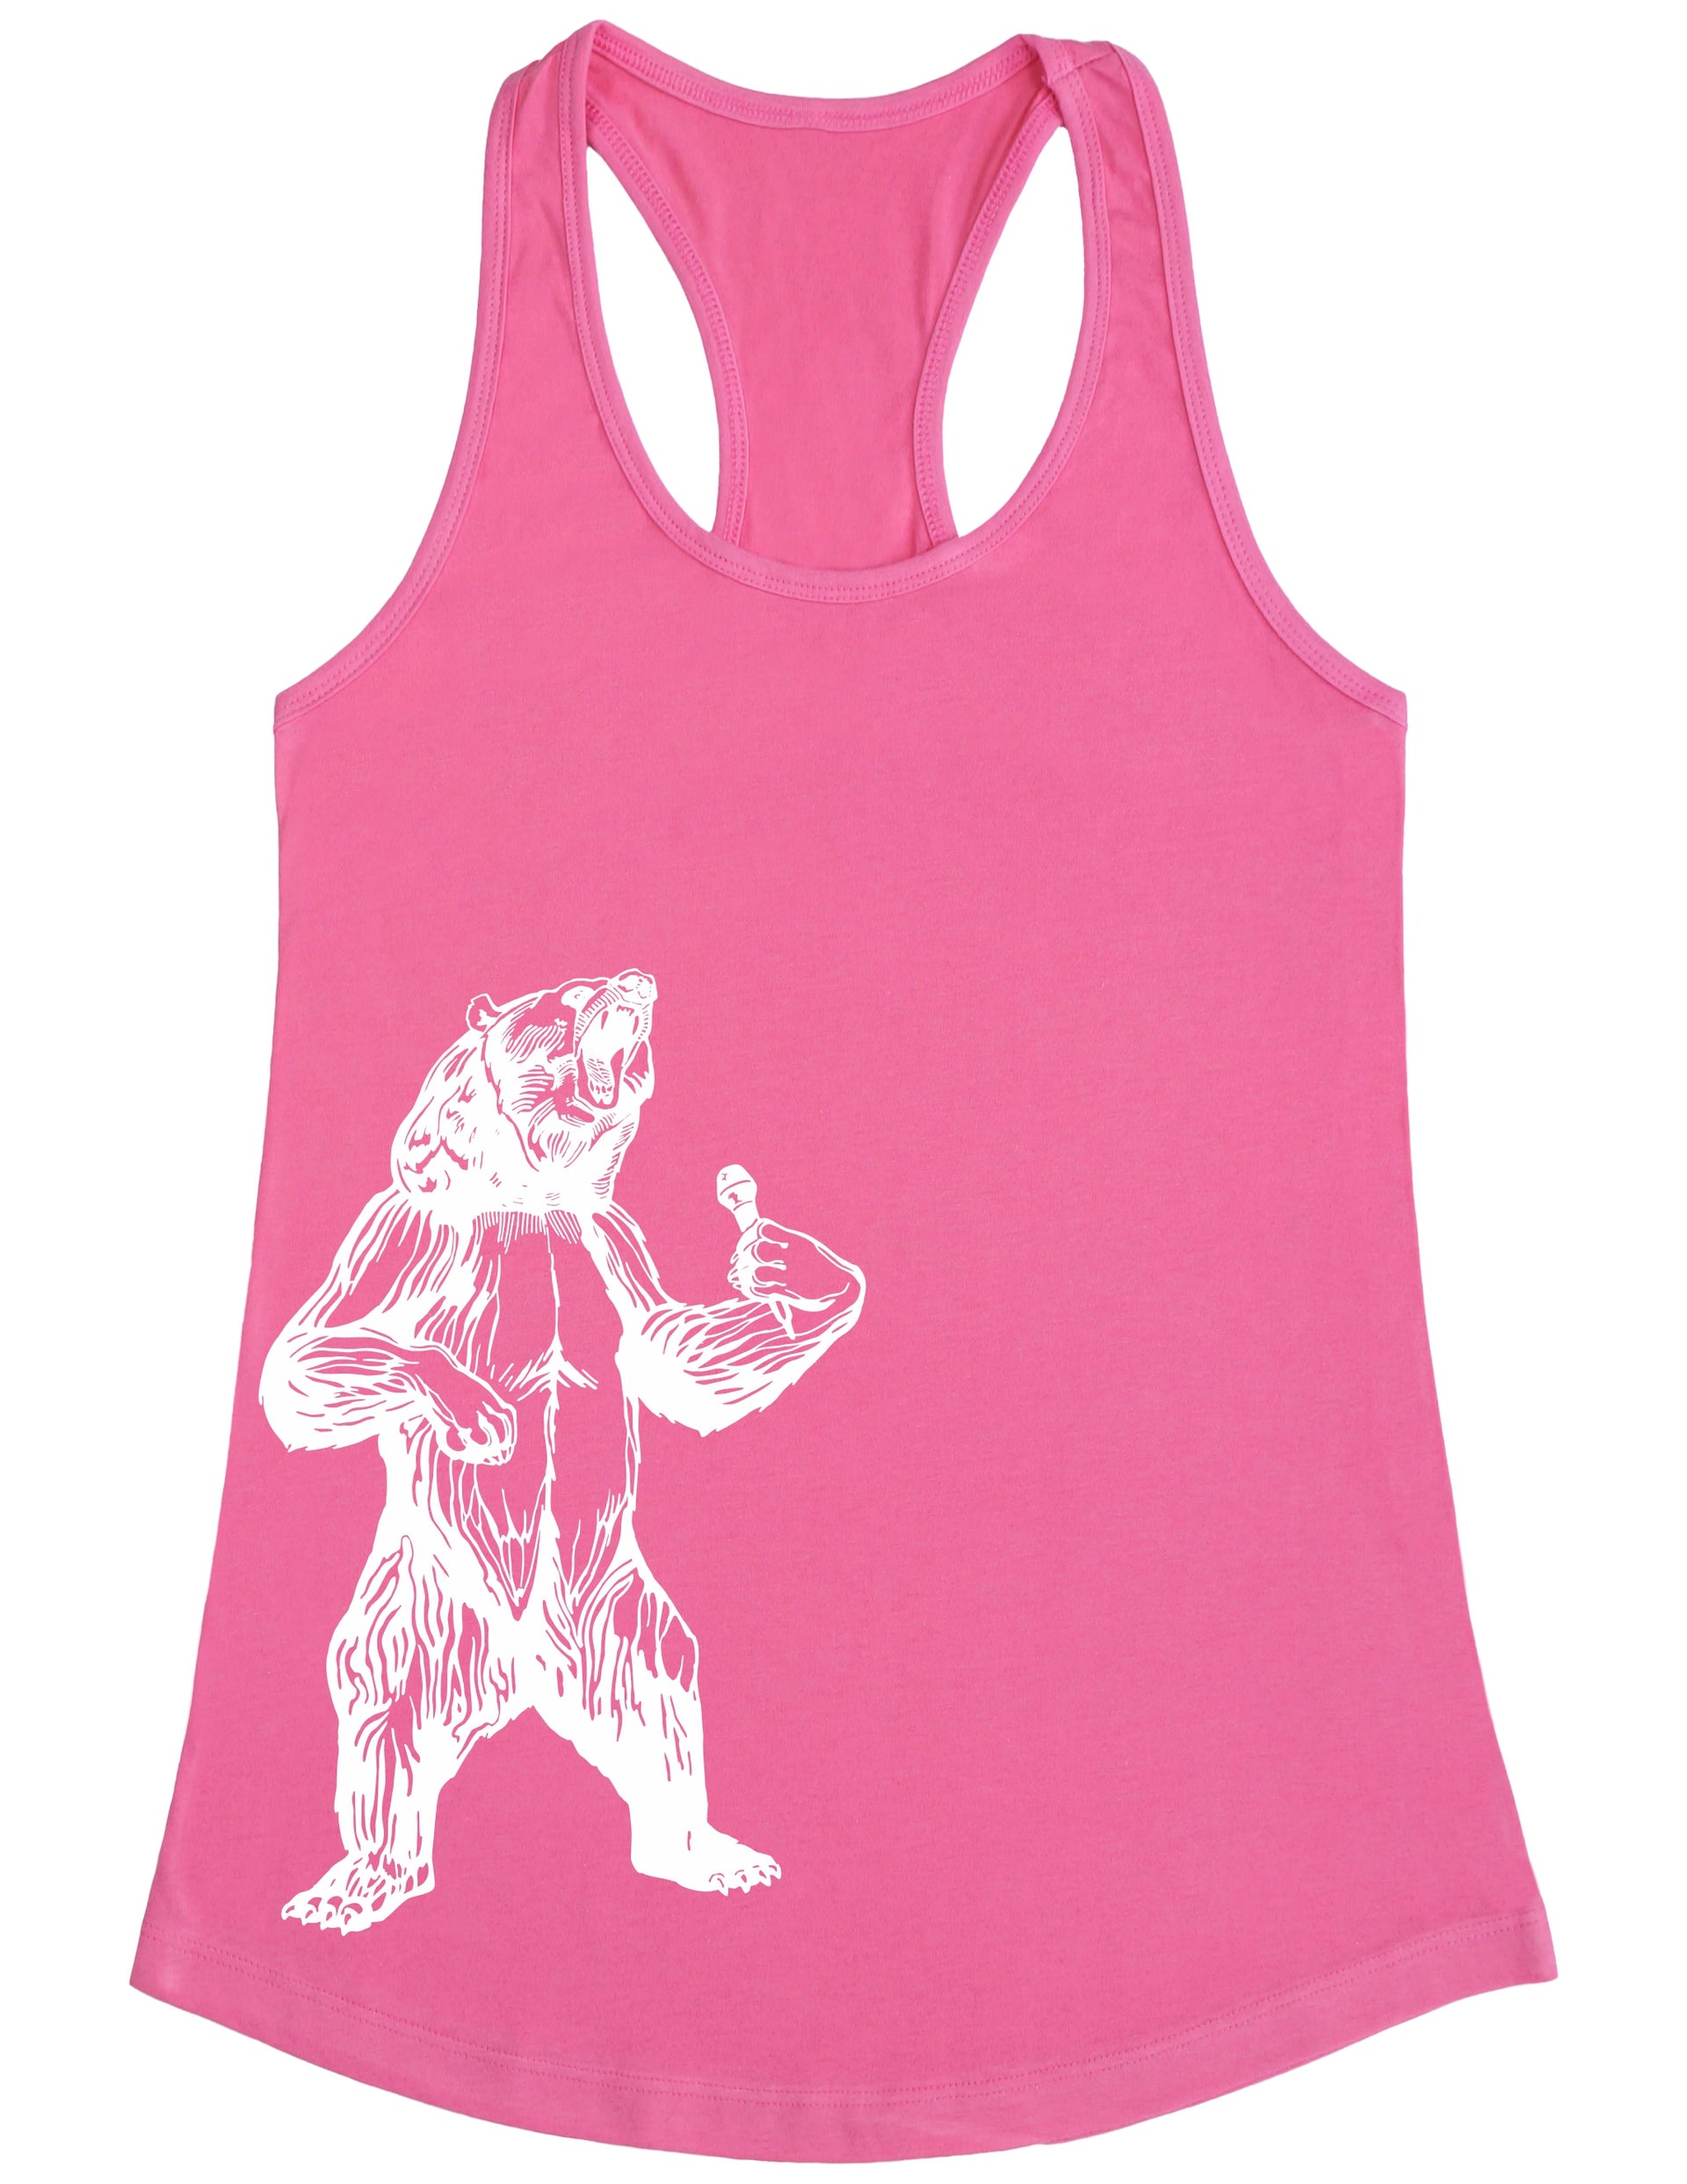 bear trying to sing karaoke seembo women poly cotton tank top pink color side print